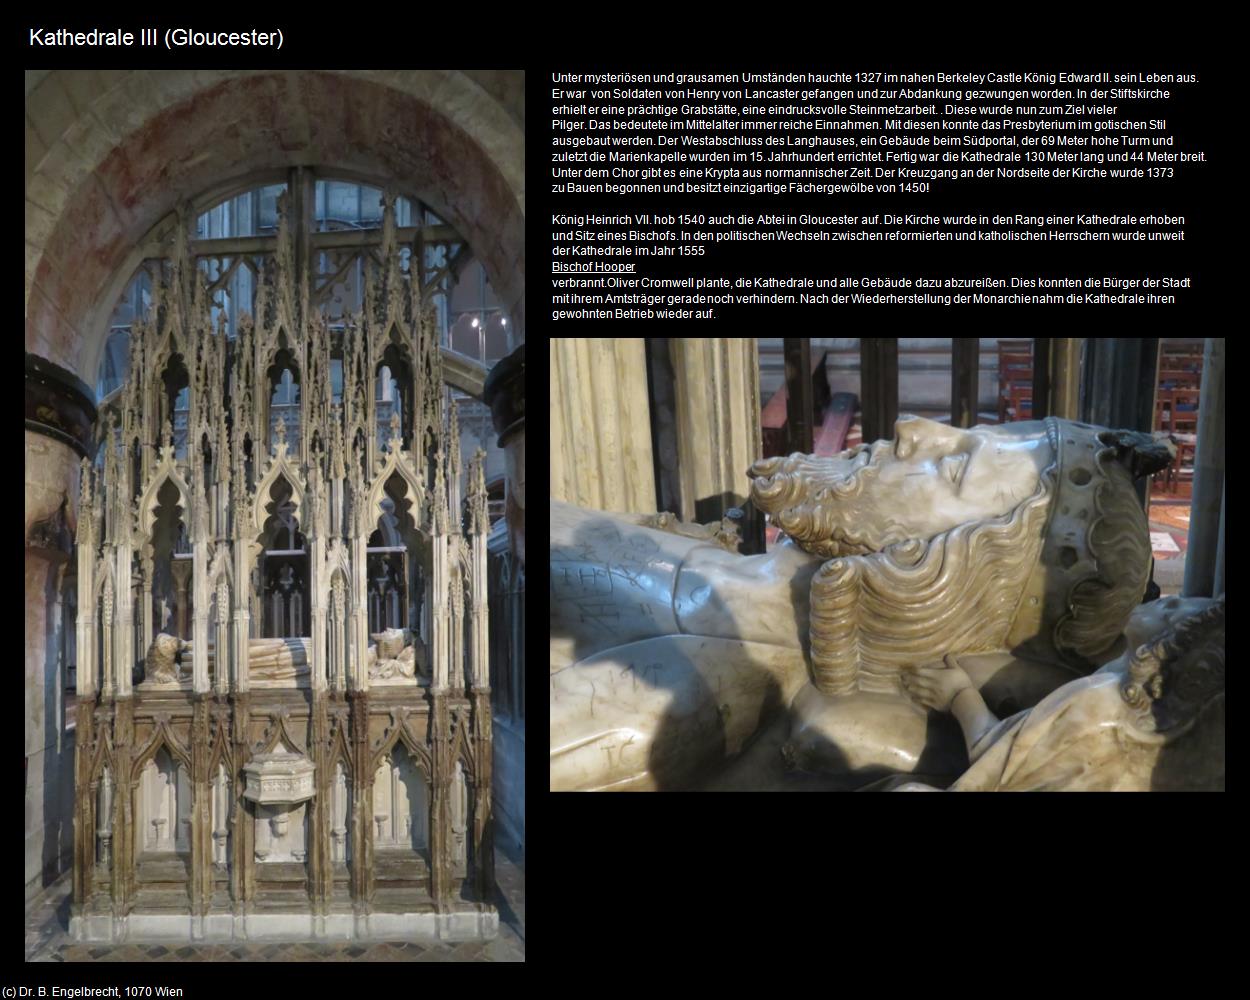 Kathedrale III (Gloucester, England) in Kulturatlas-ENGLAND und WALES(c)B.Engelbrecht